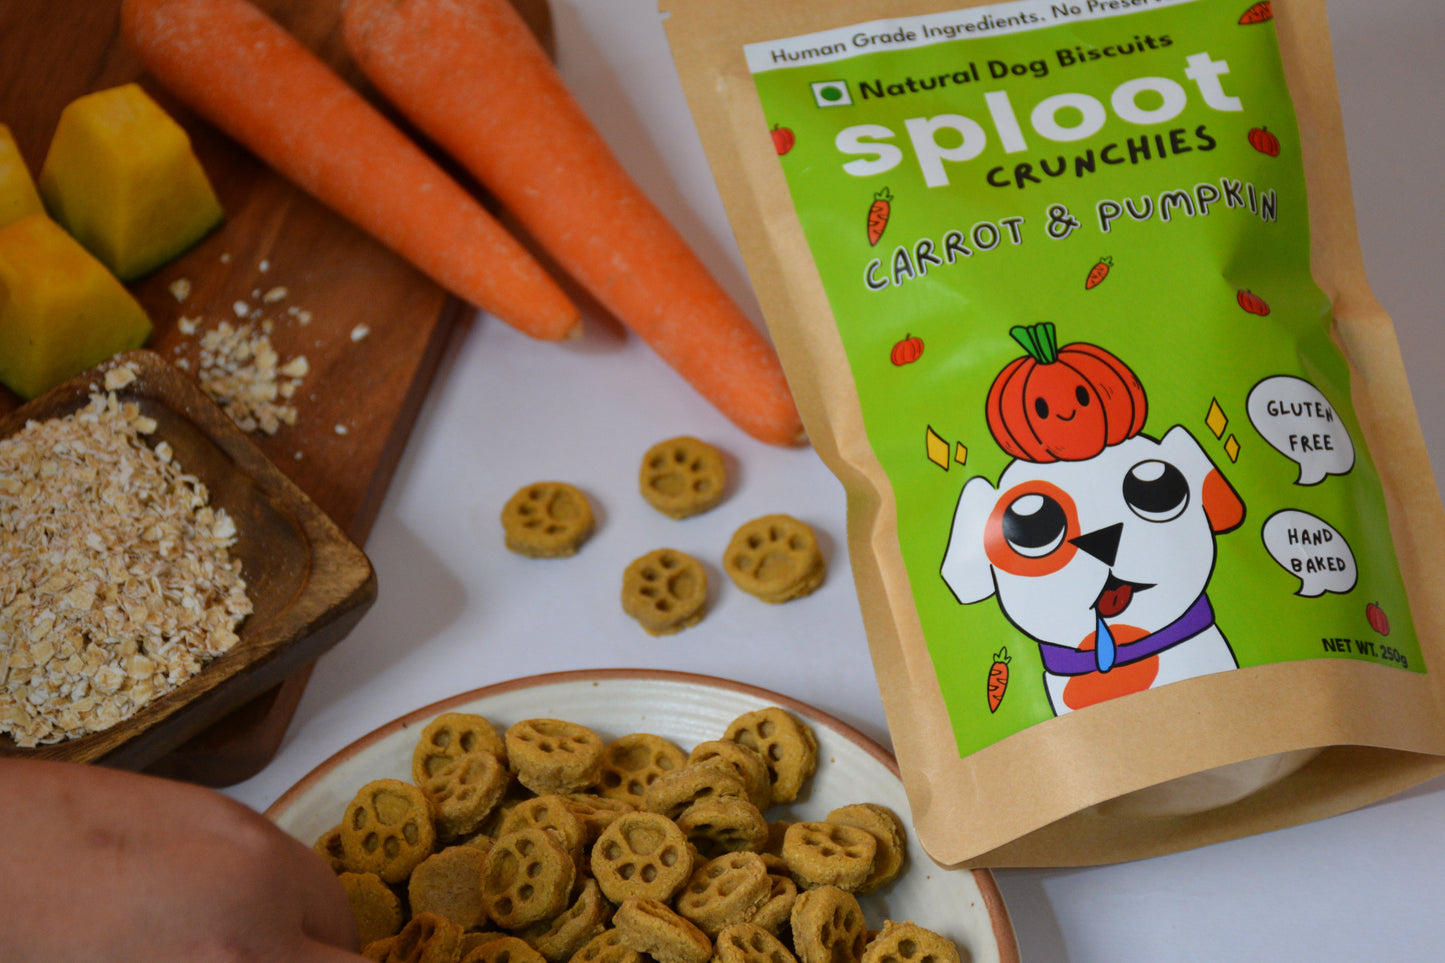 sploot Crunchies Pumkin and Carrot | 100% Human Grade Dog Biscuits - Sploot